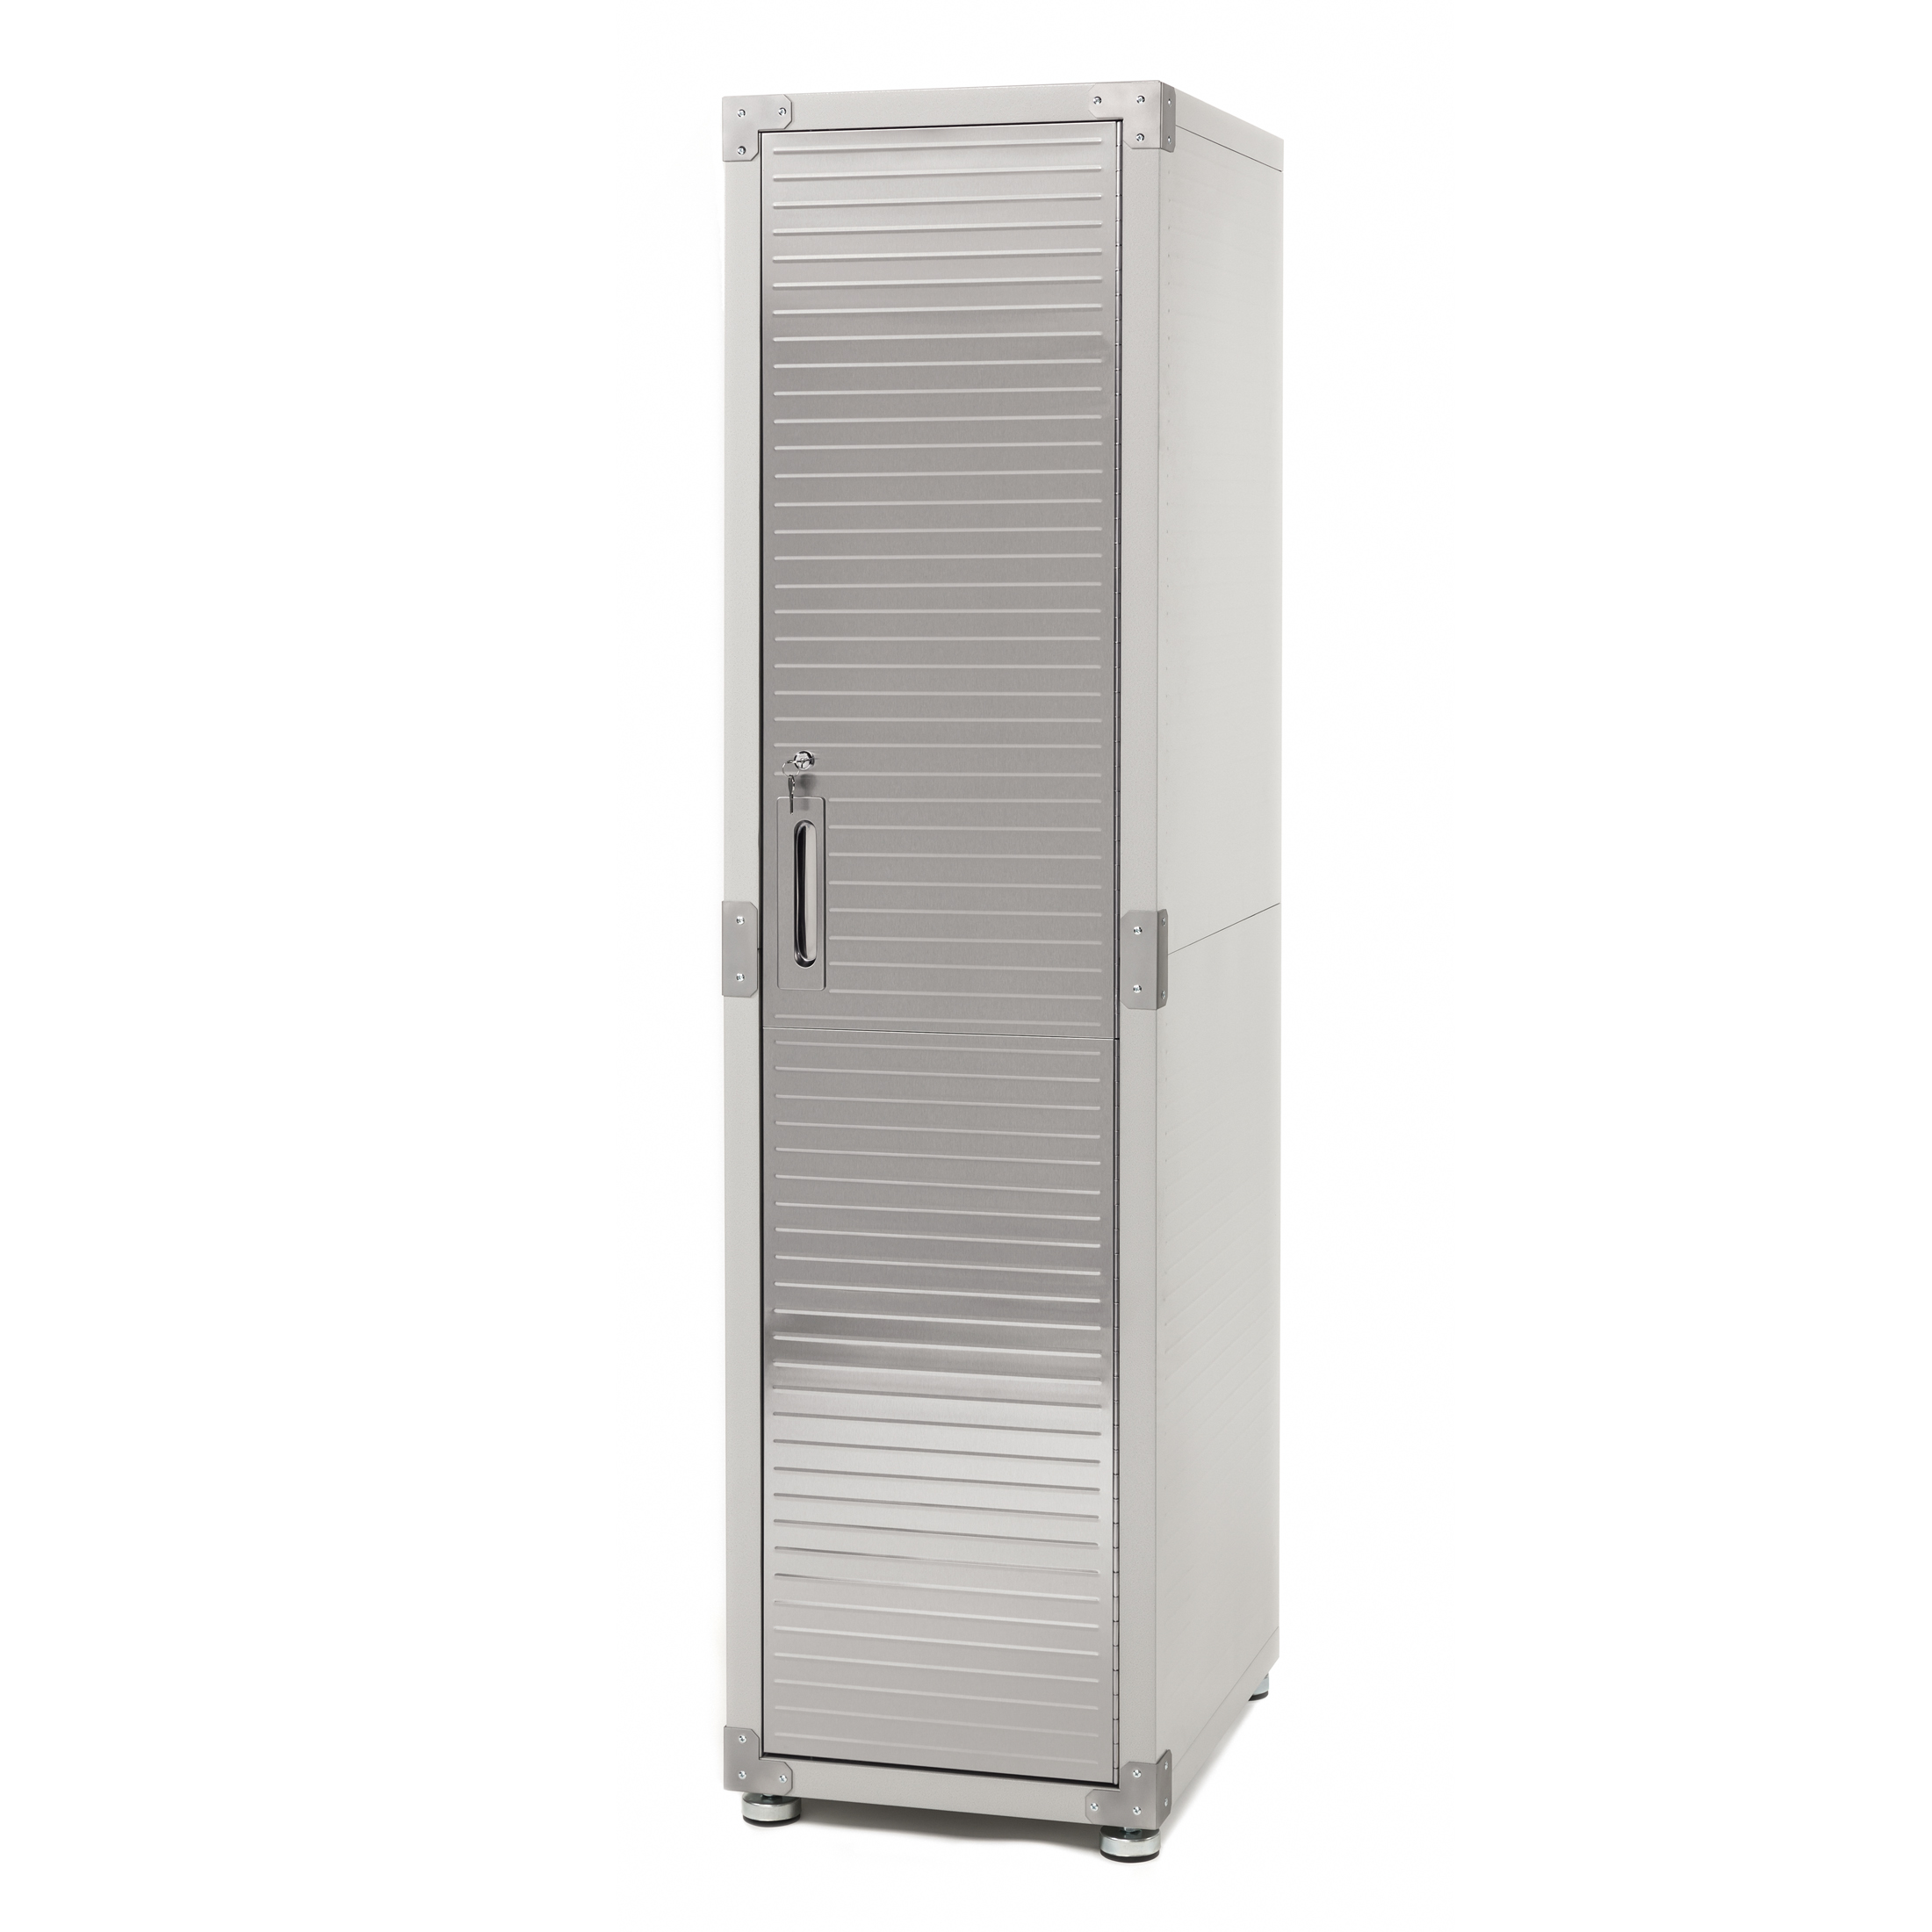 Seville Classics UltraHD Locker Storage Cabinet, 18" W x 24" D x 72" H, Granite Gray - image 1 of 6